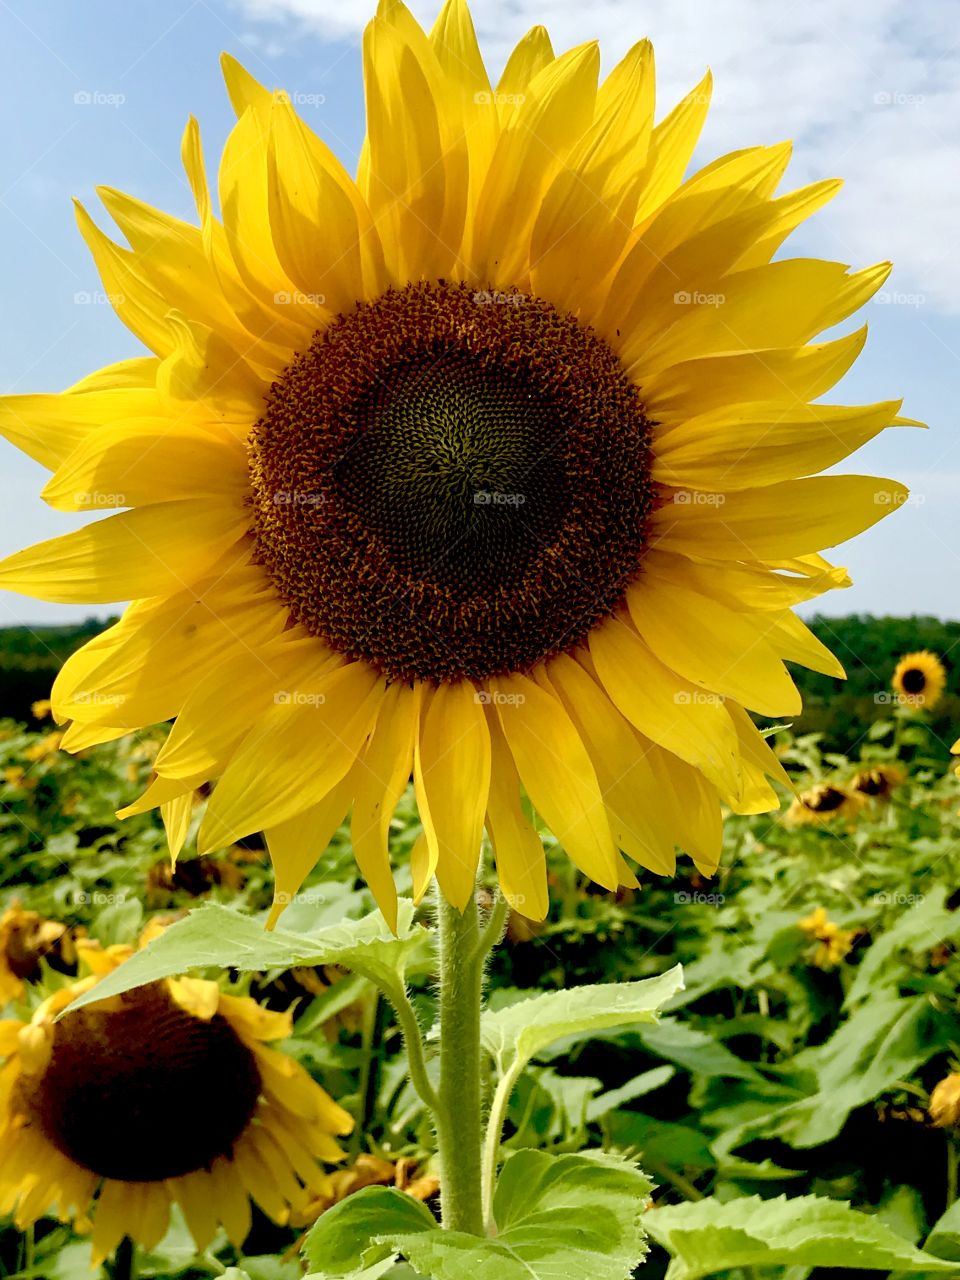 The majestic sunflower 